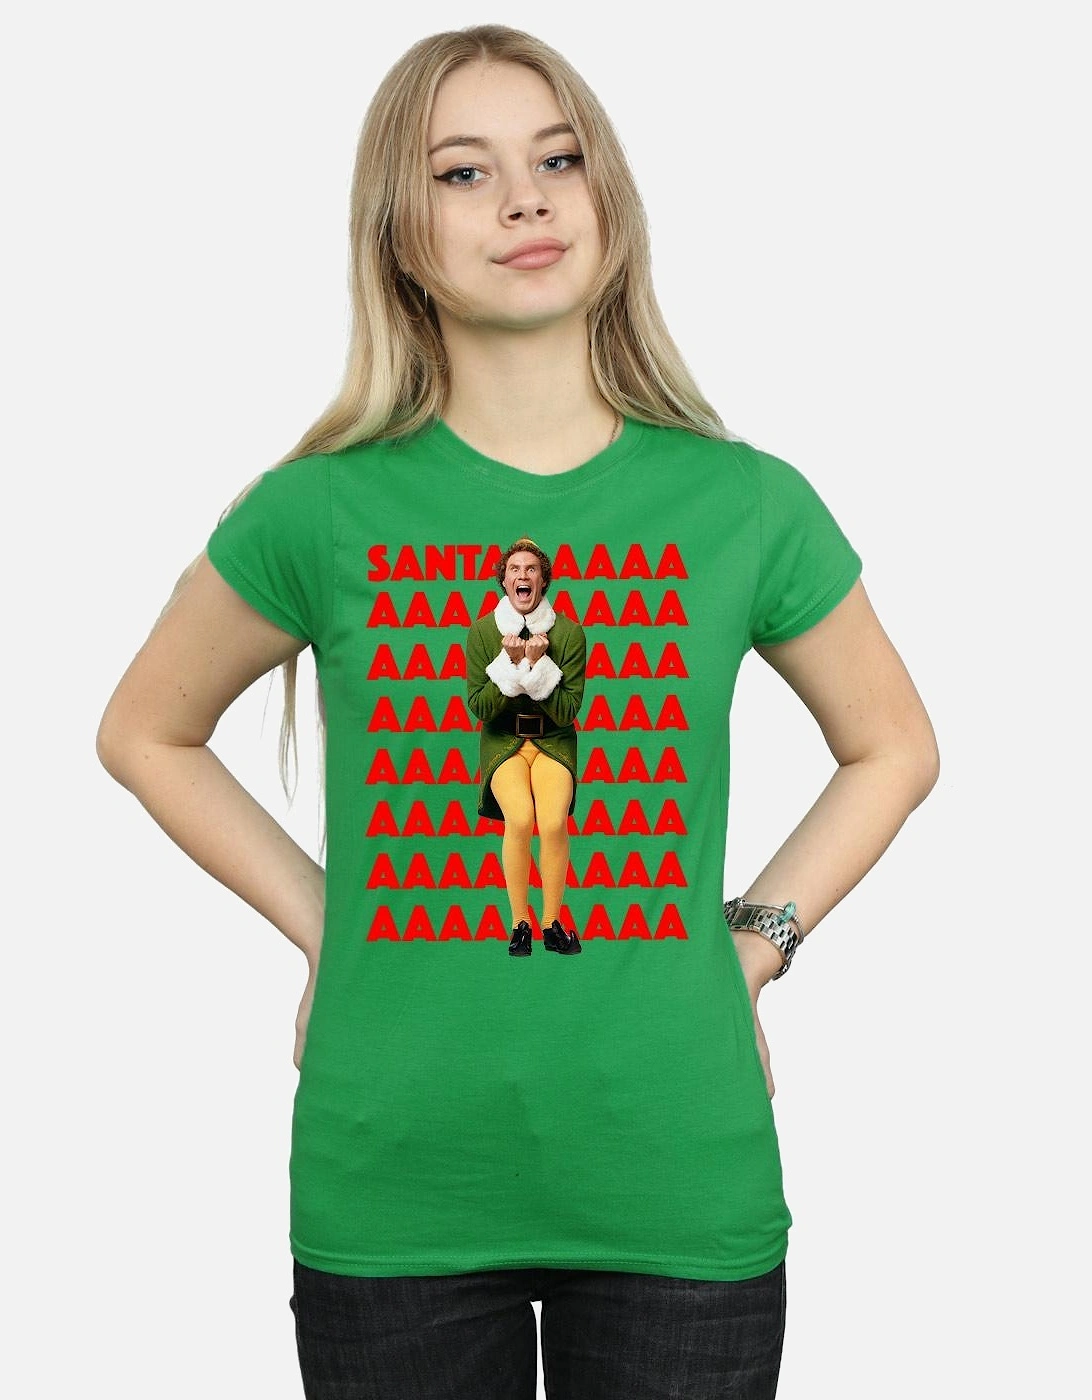 Womens/Ladies Buddy Santa Scream Cotton T-Shirt